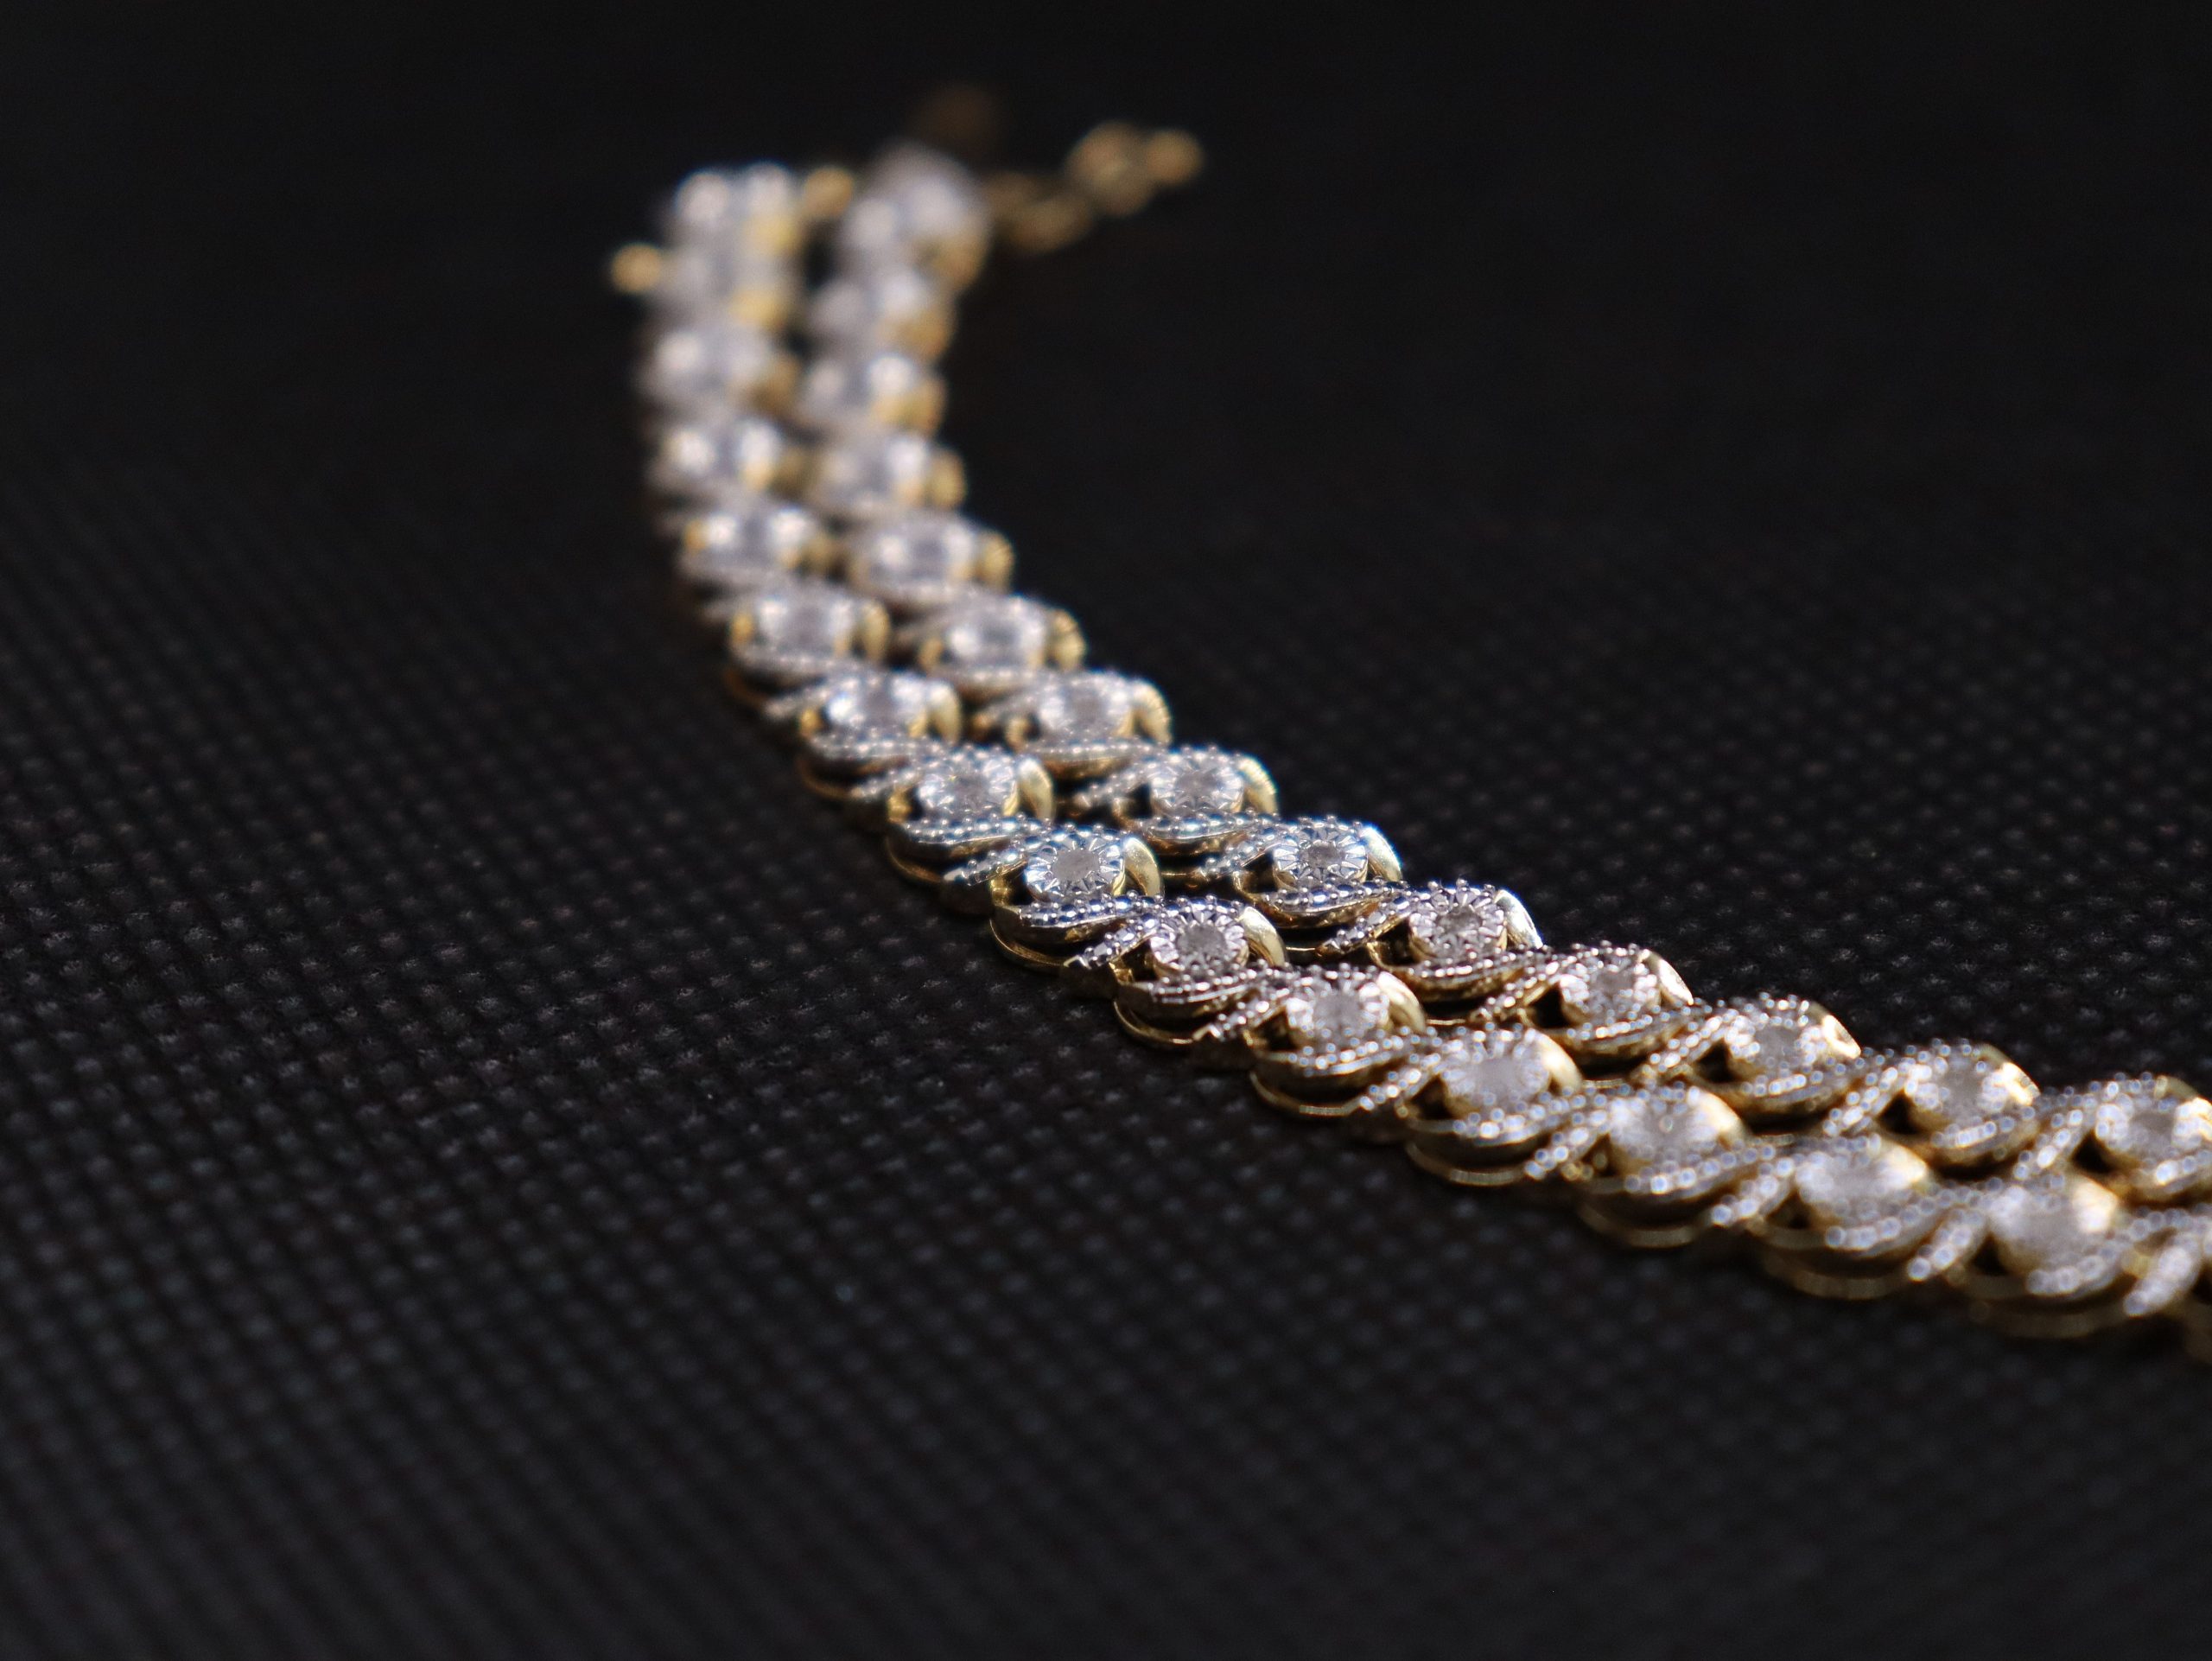 A closeup shot of a Diamond Tennis Bracelet on a black surface